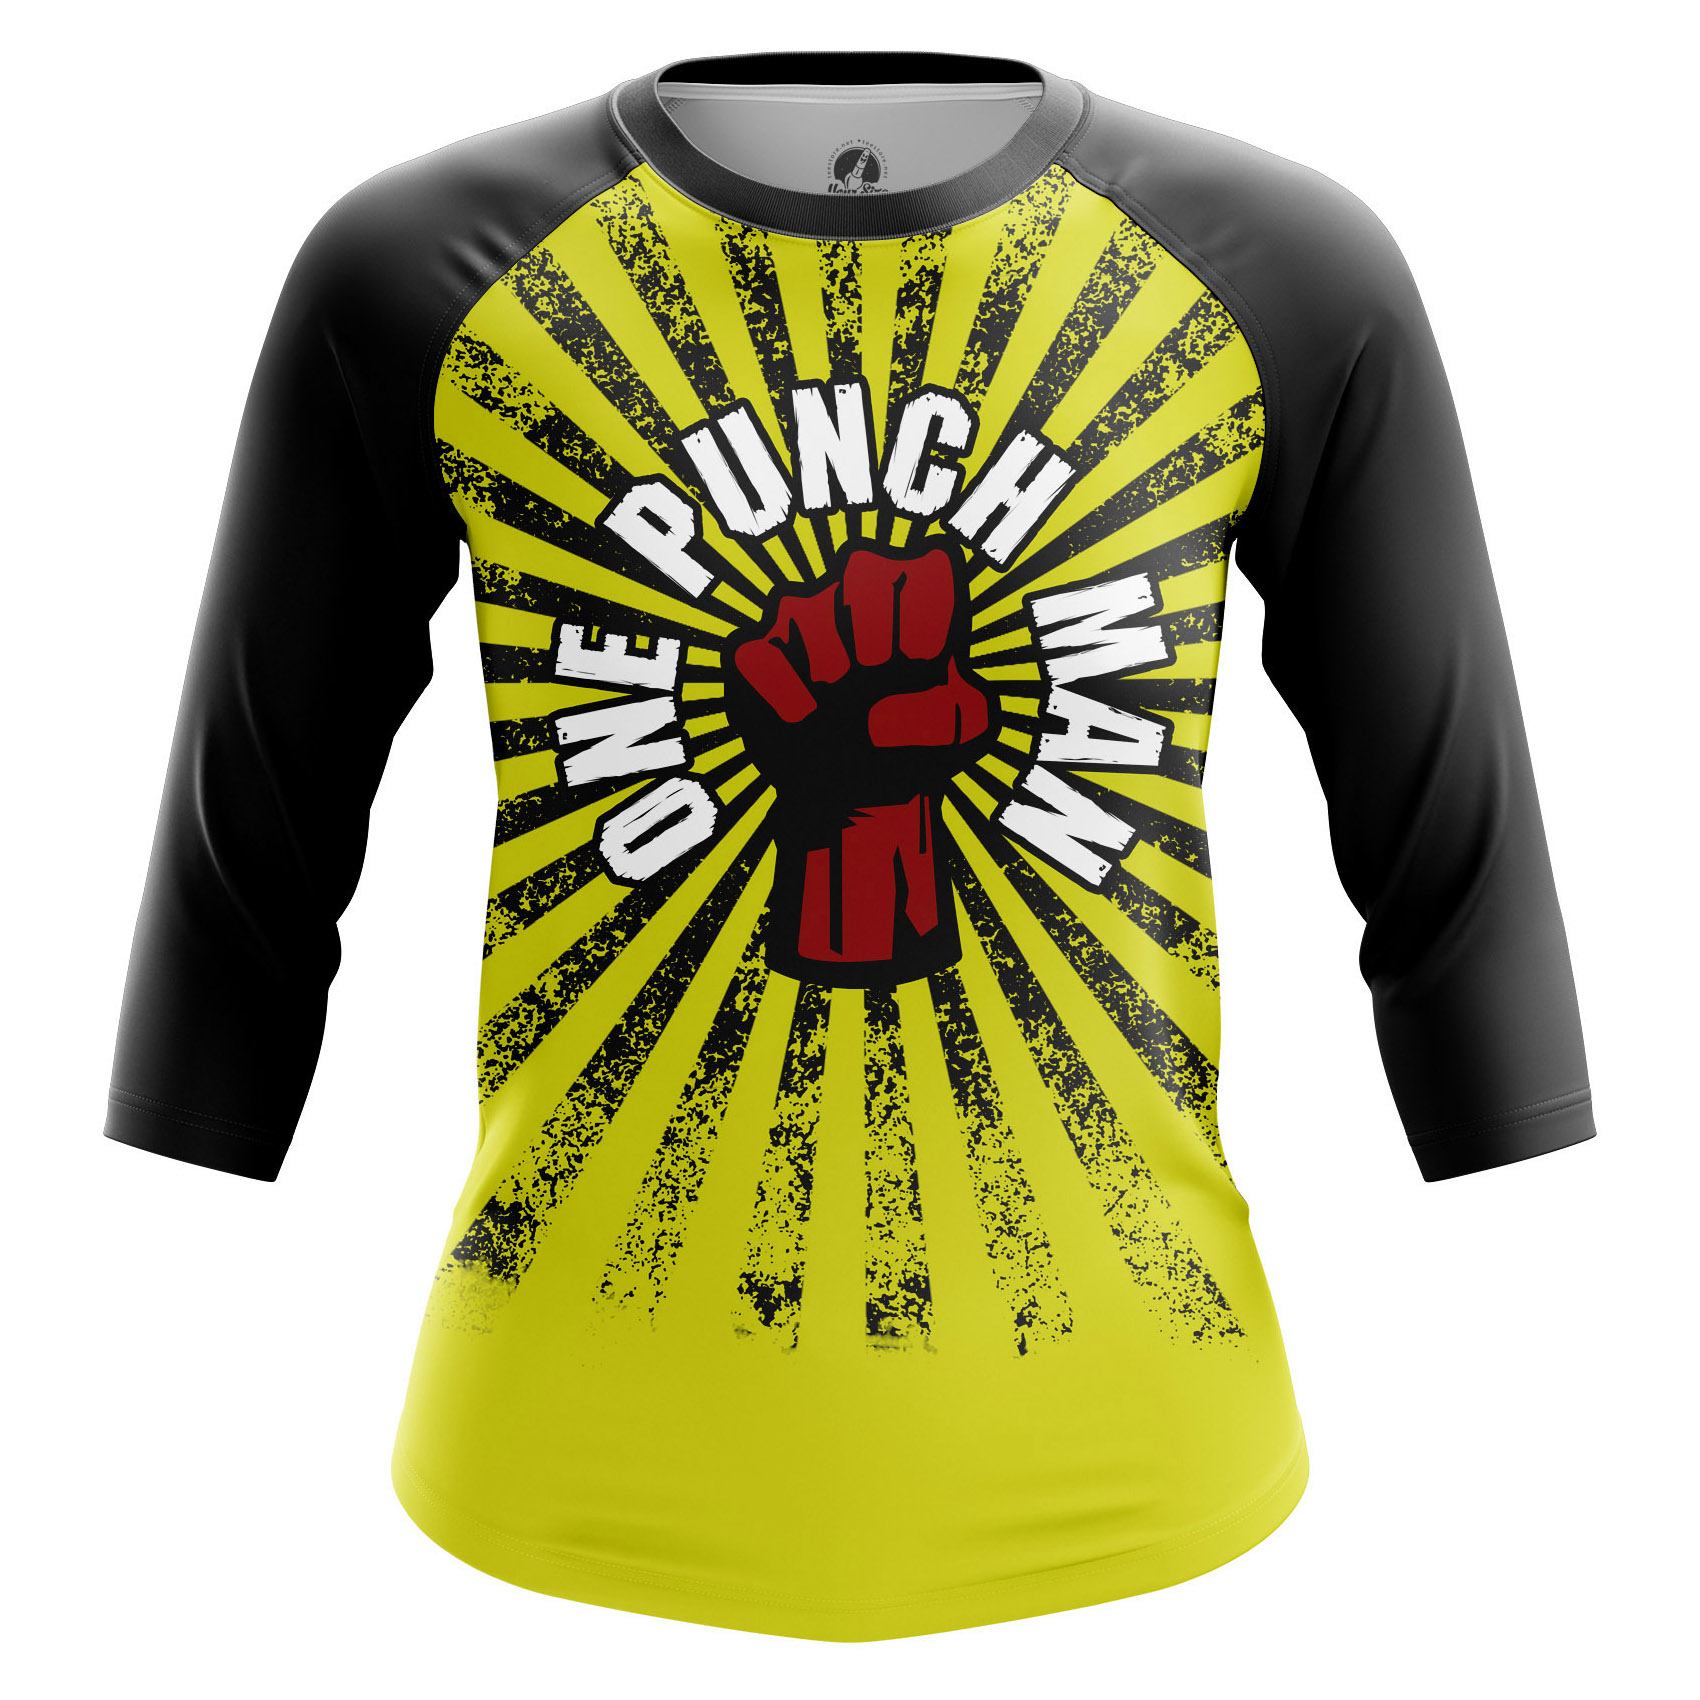 Merchandise Women'S Raglan One Punch Man Baseball Shirt